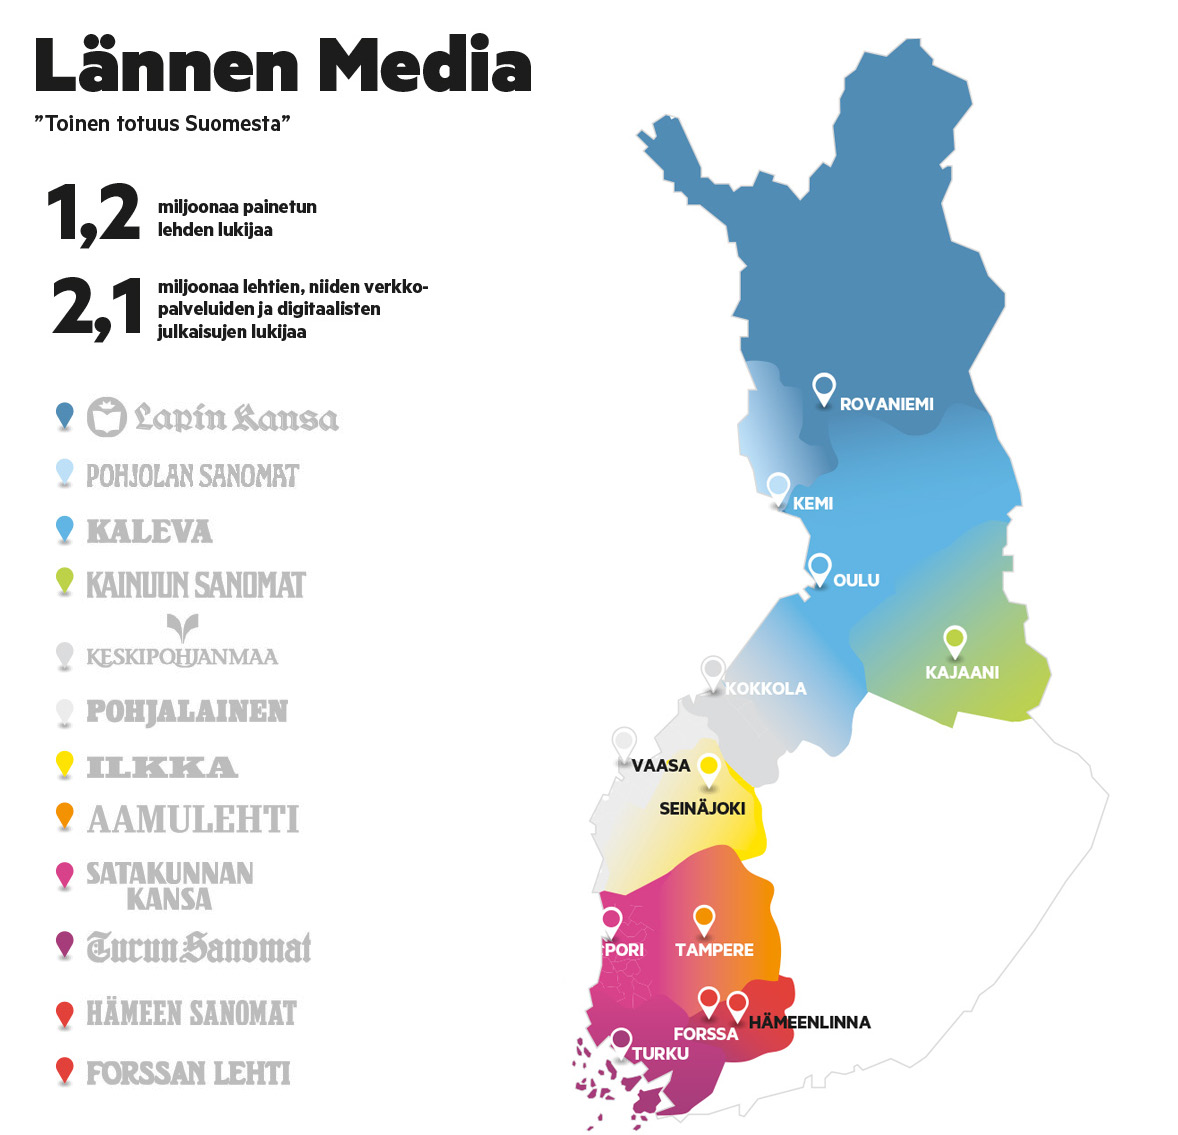 Lannen Media